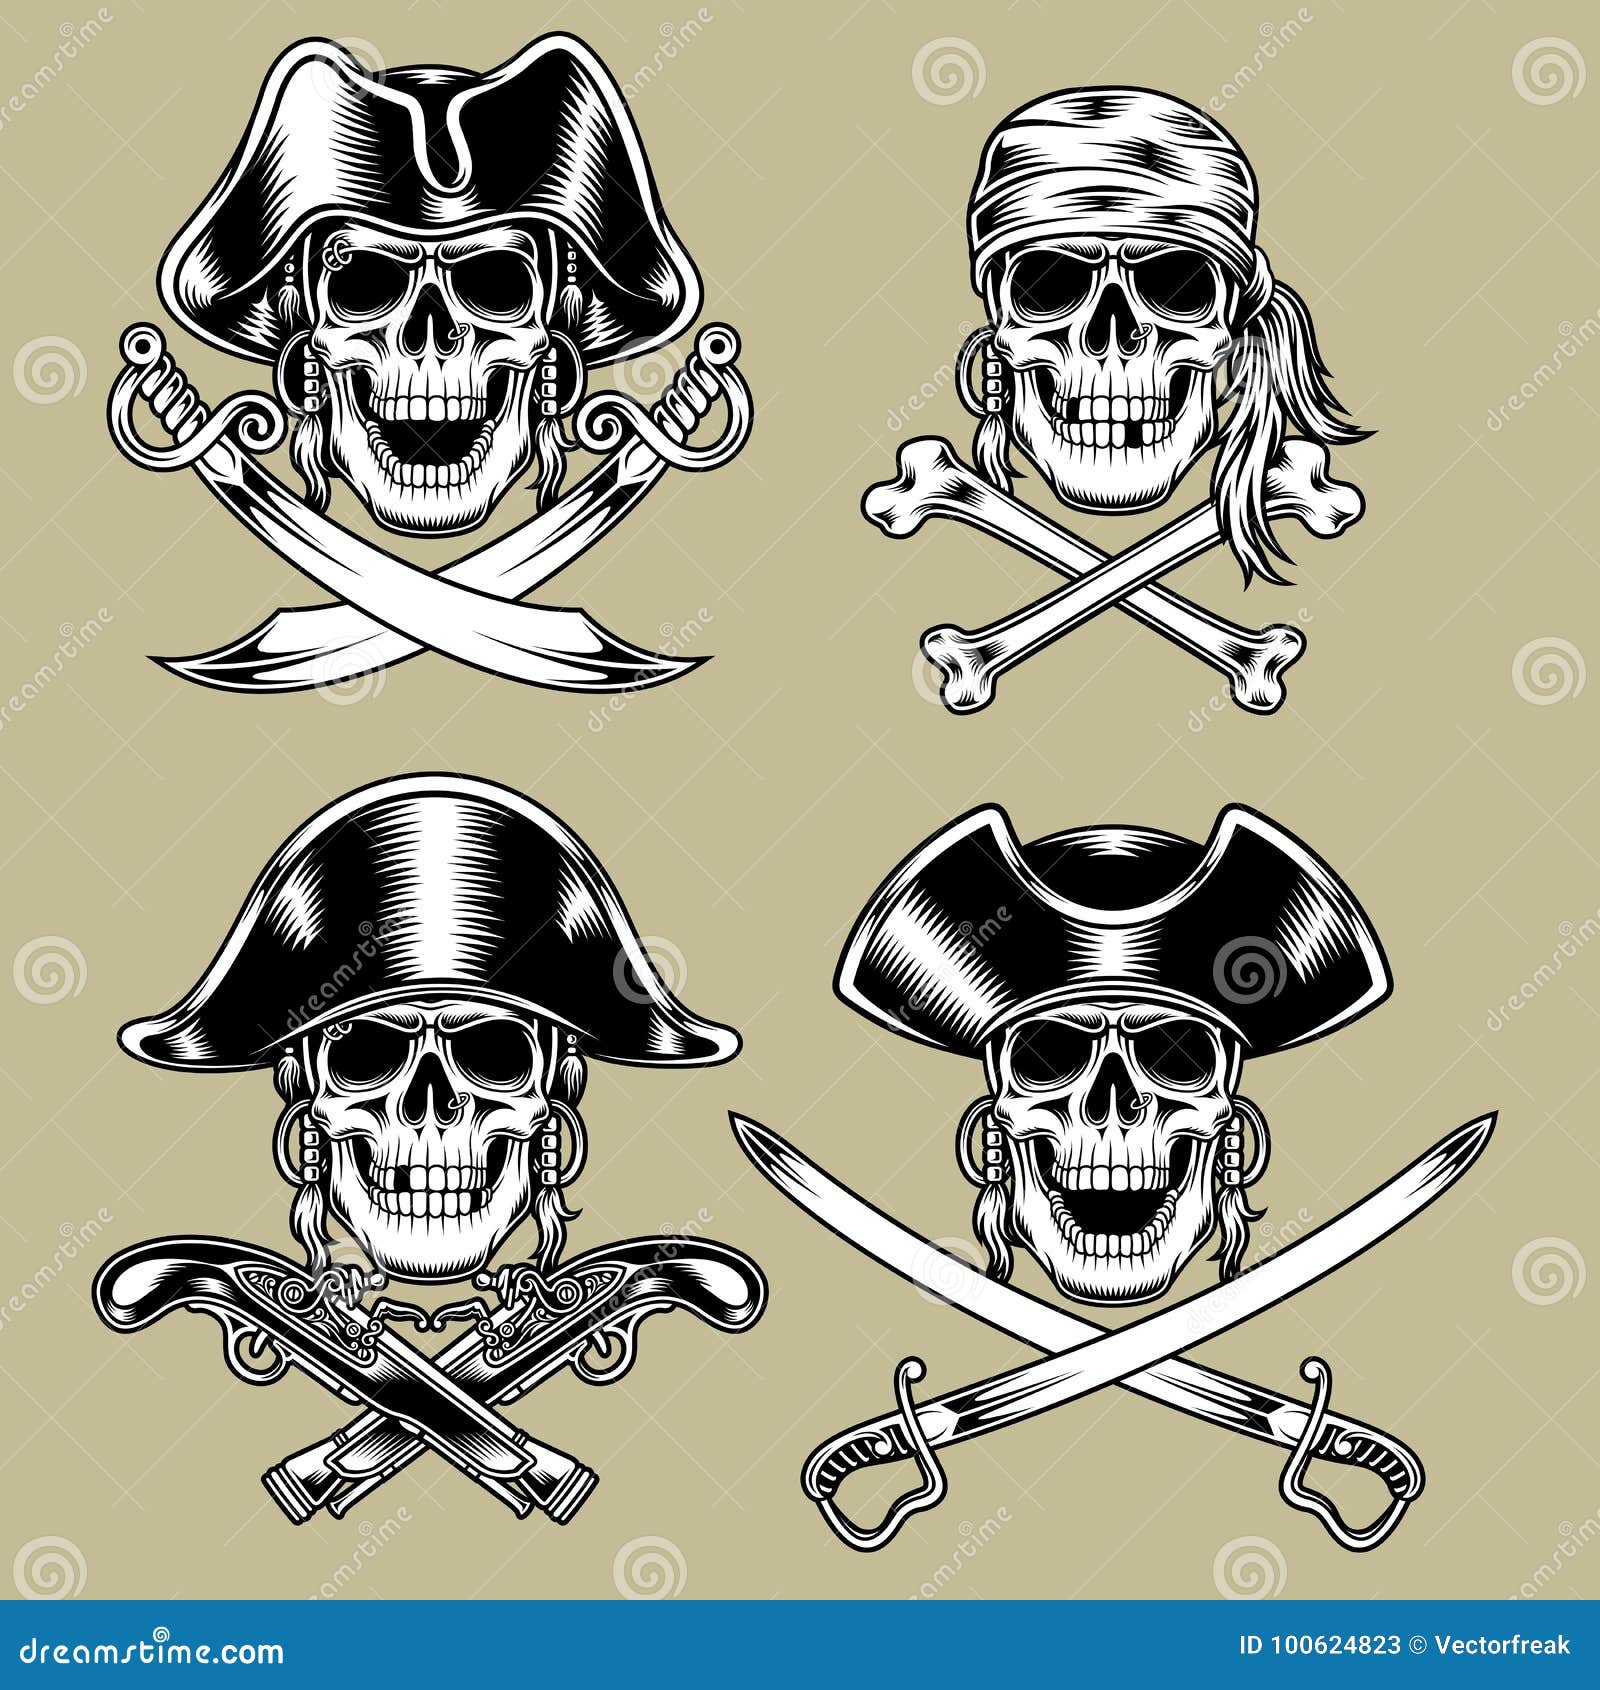 150 Clip Art Of A Pirate Flag Tattoo Illustrations RoyaltyFree Vector  Graphics  Clip Art  iStock